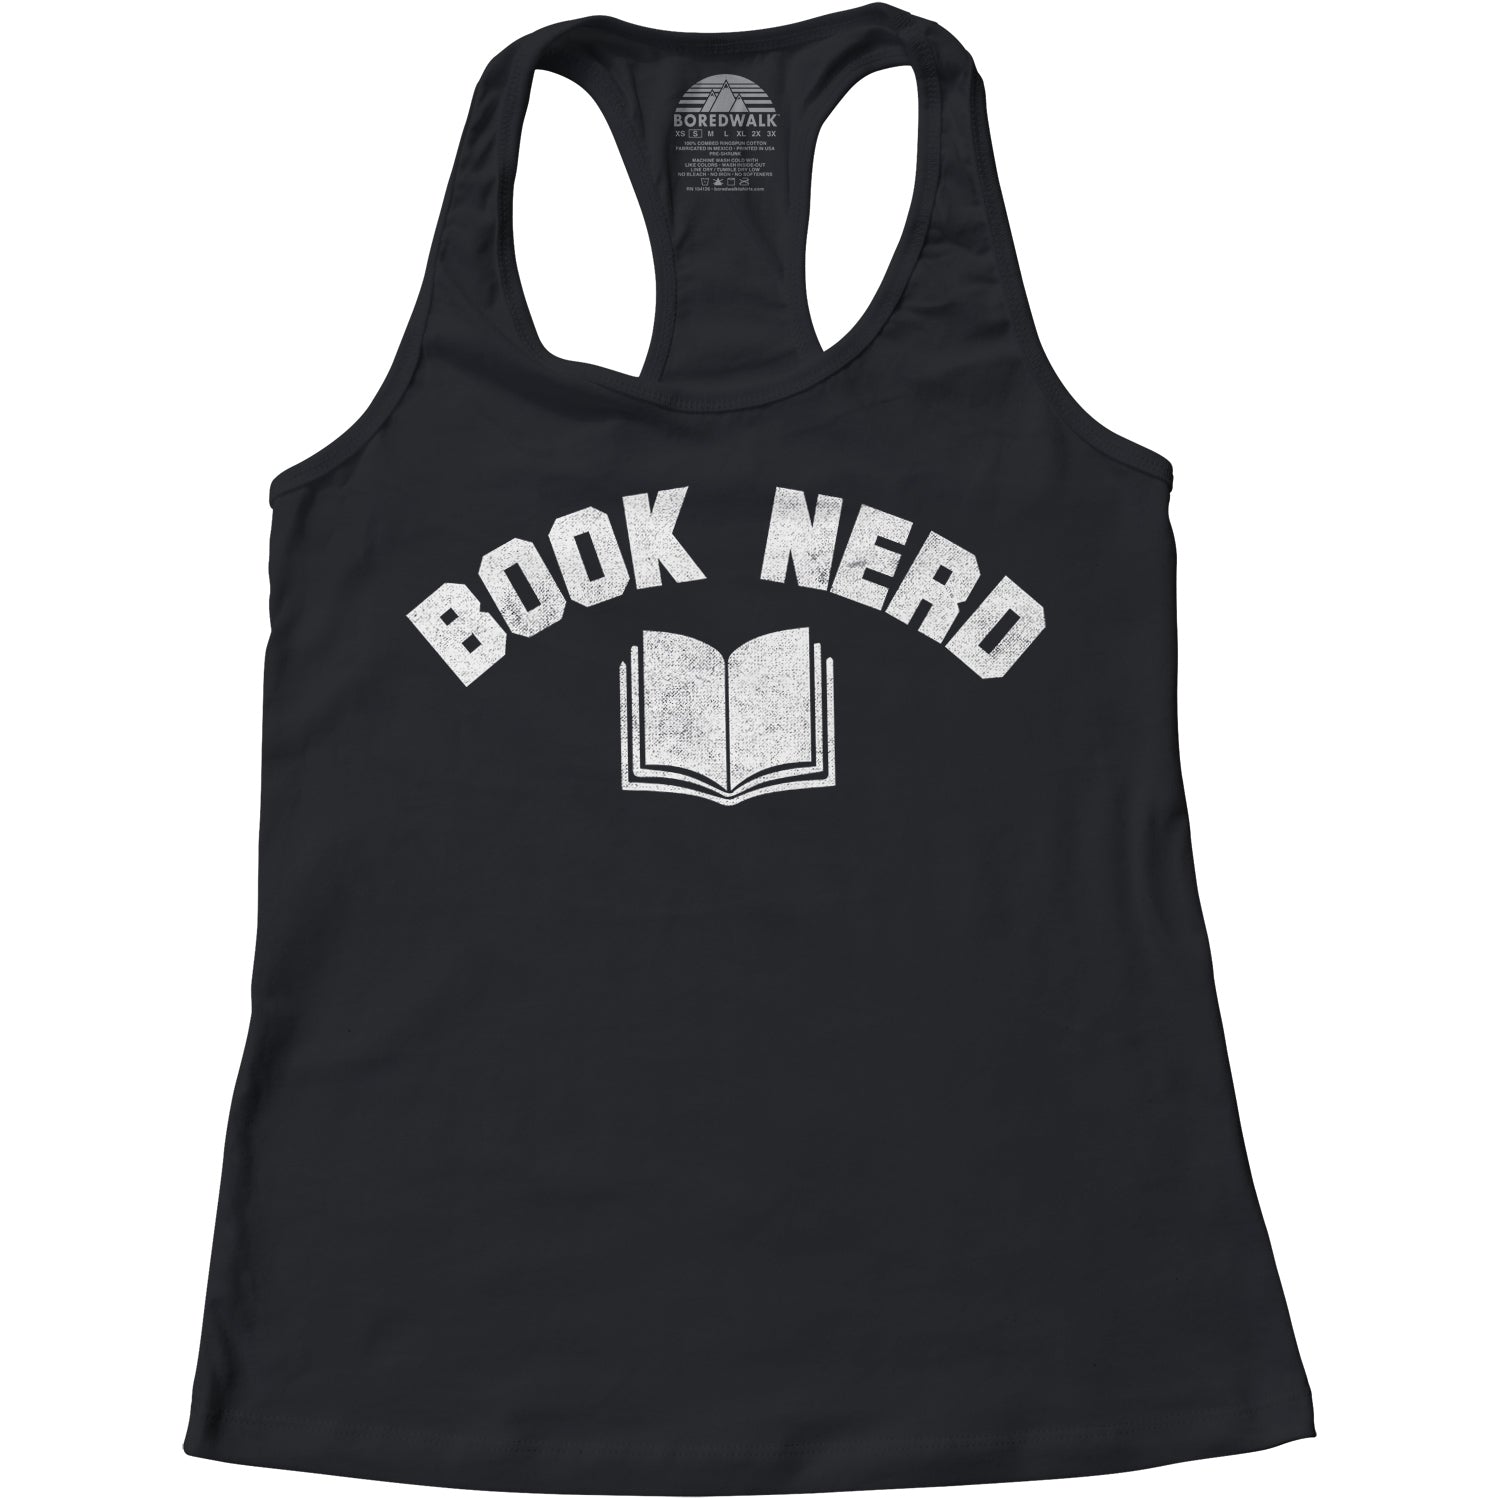 Women's Book Nerd Vintage Geeky Nerdy Literary Racerback Tank Top